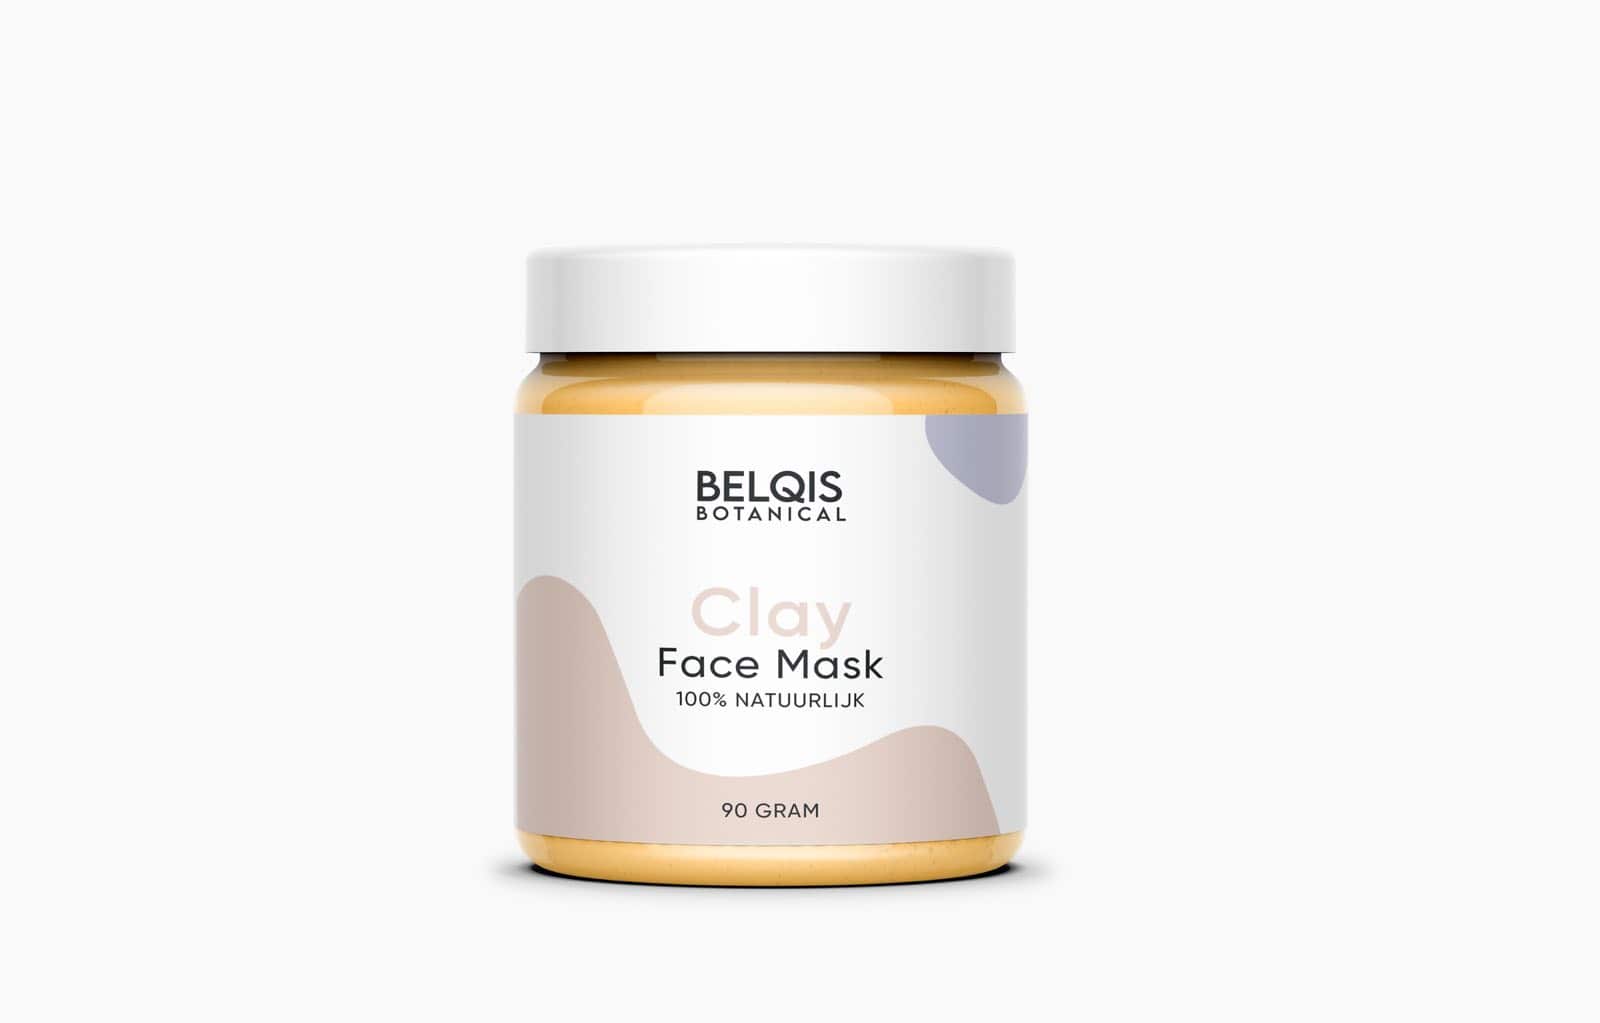 Belqis Face Mask